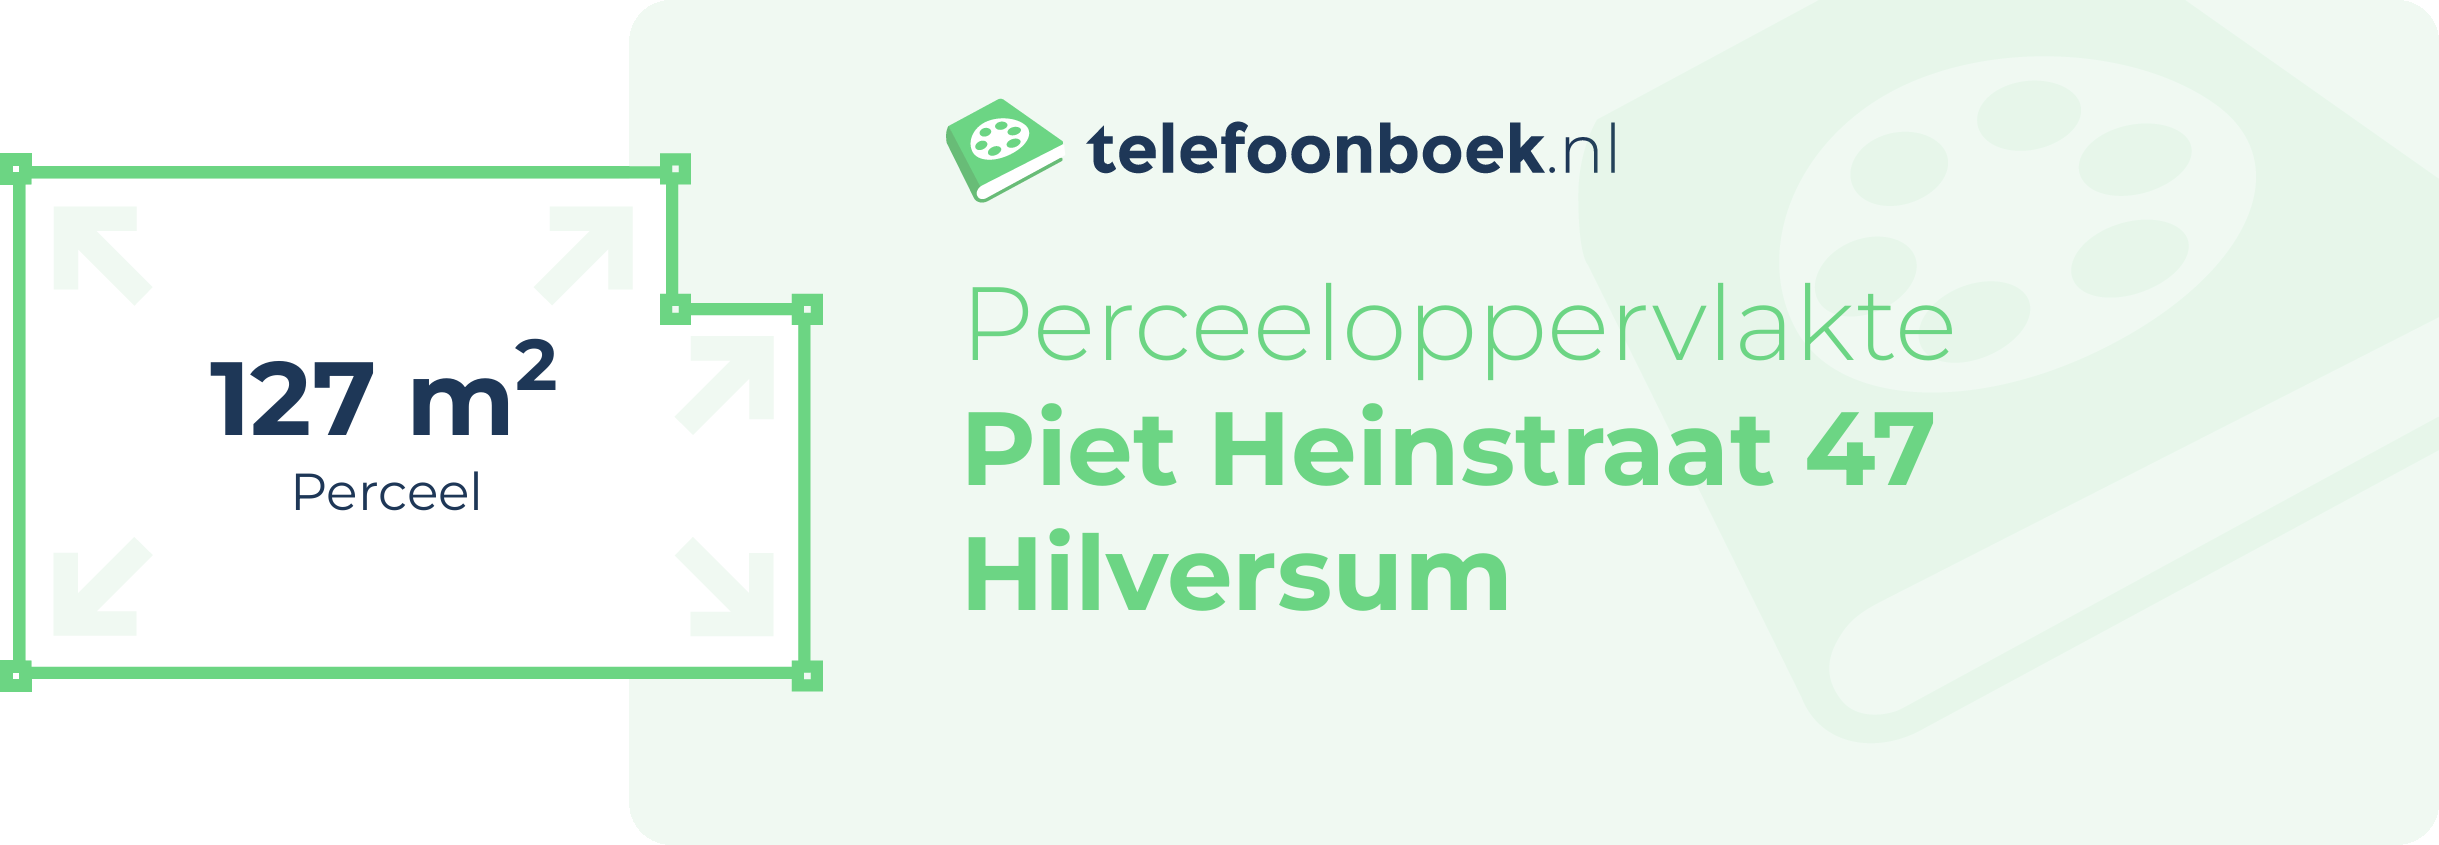 Perceeloppervlakte Piet Heinstraat 47 Hilversum